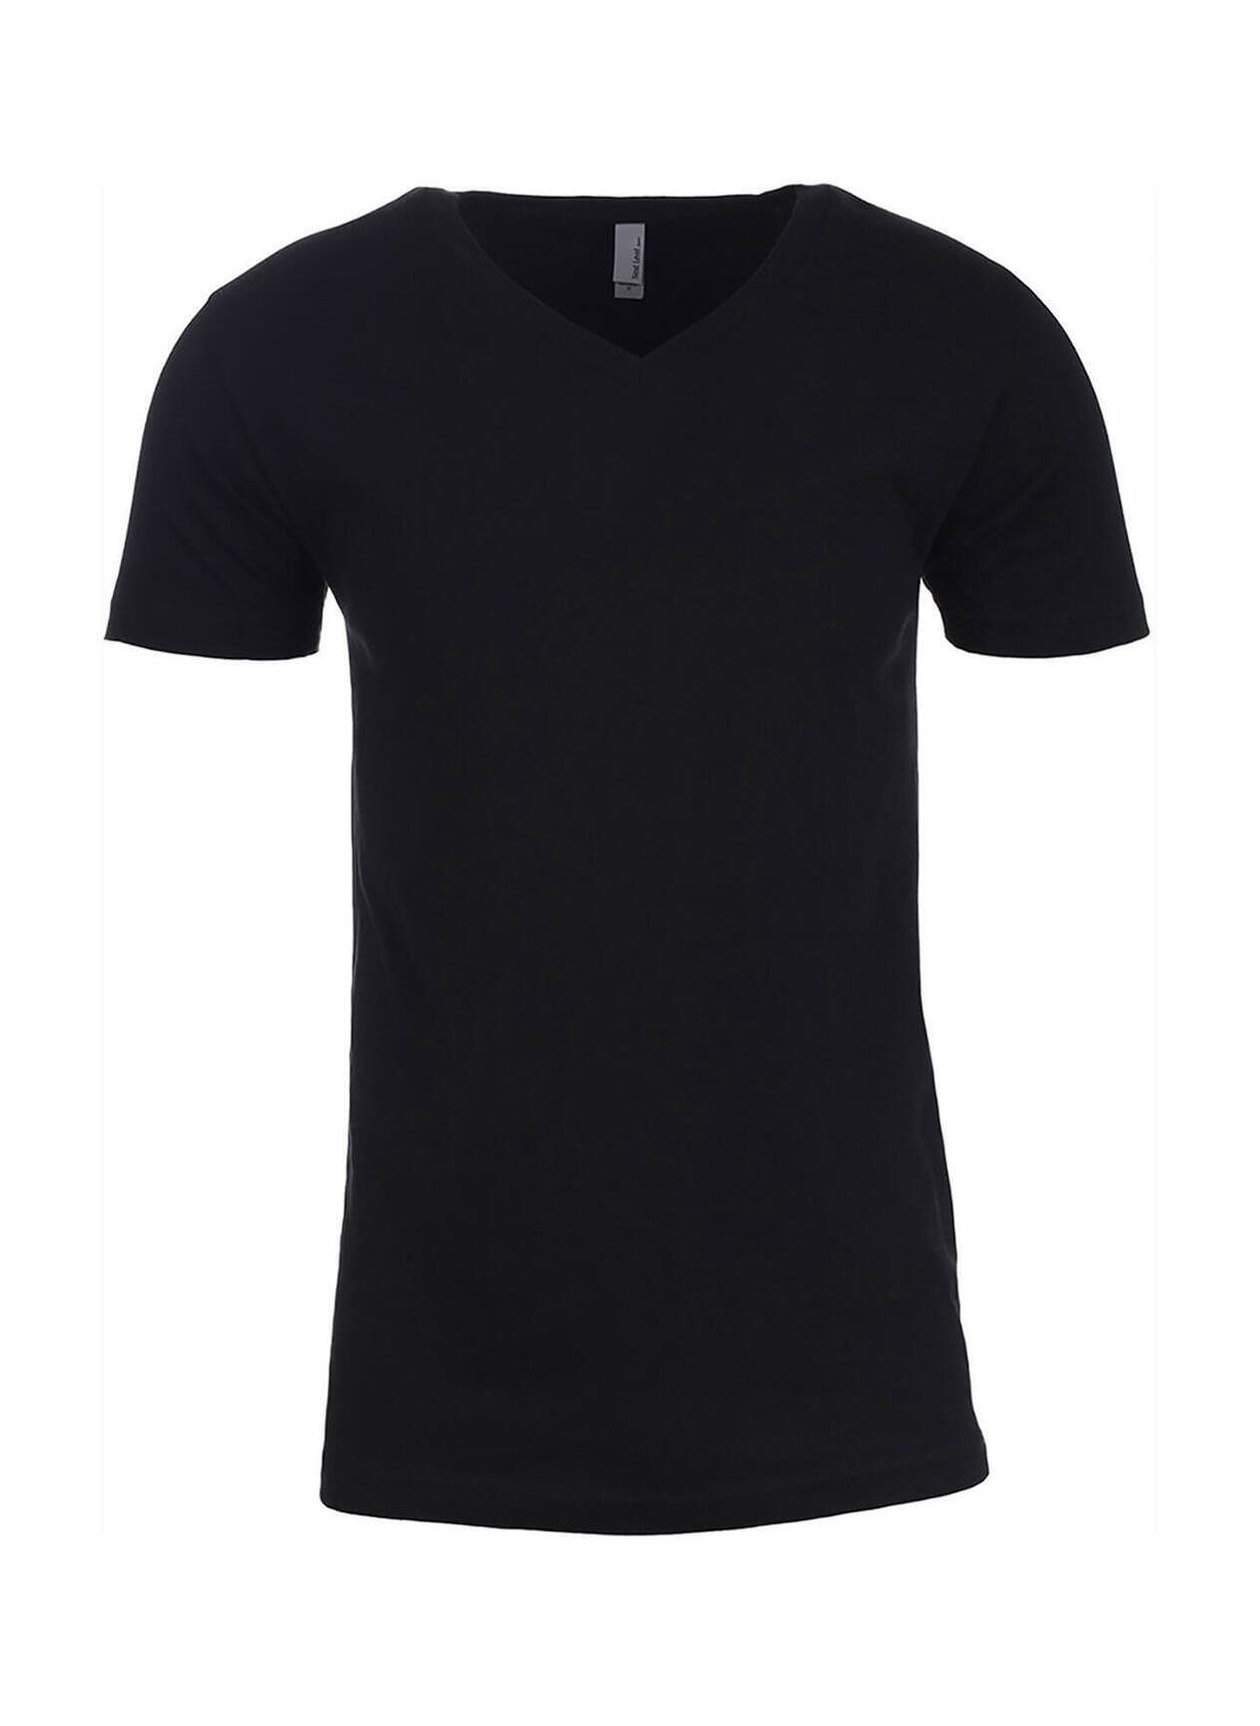 Next Level Men's Black Cotton V-Neck T-Shirt